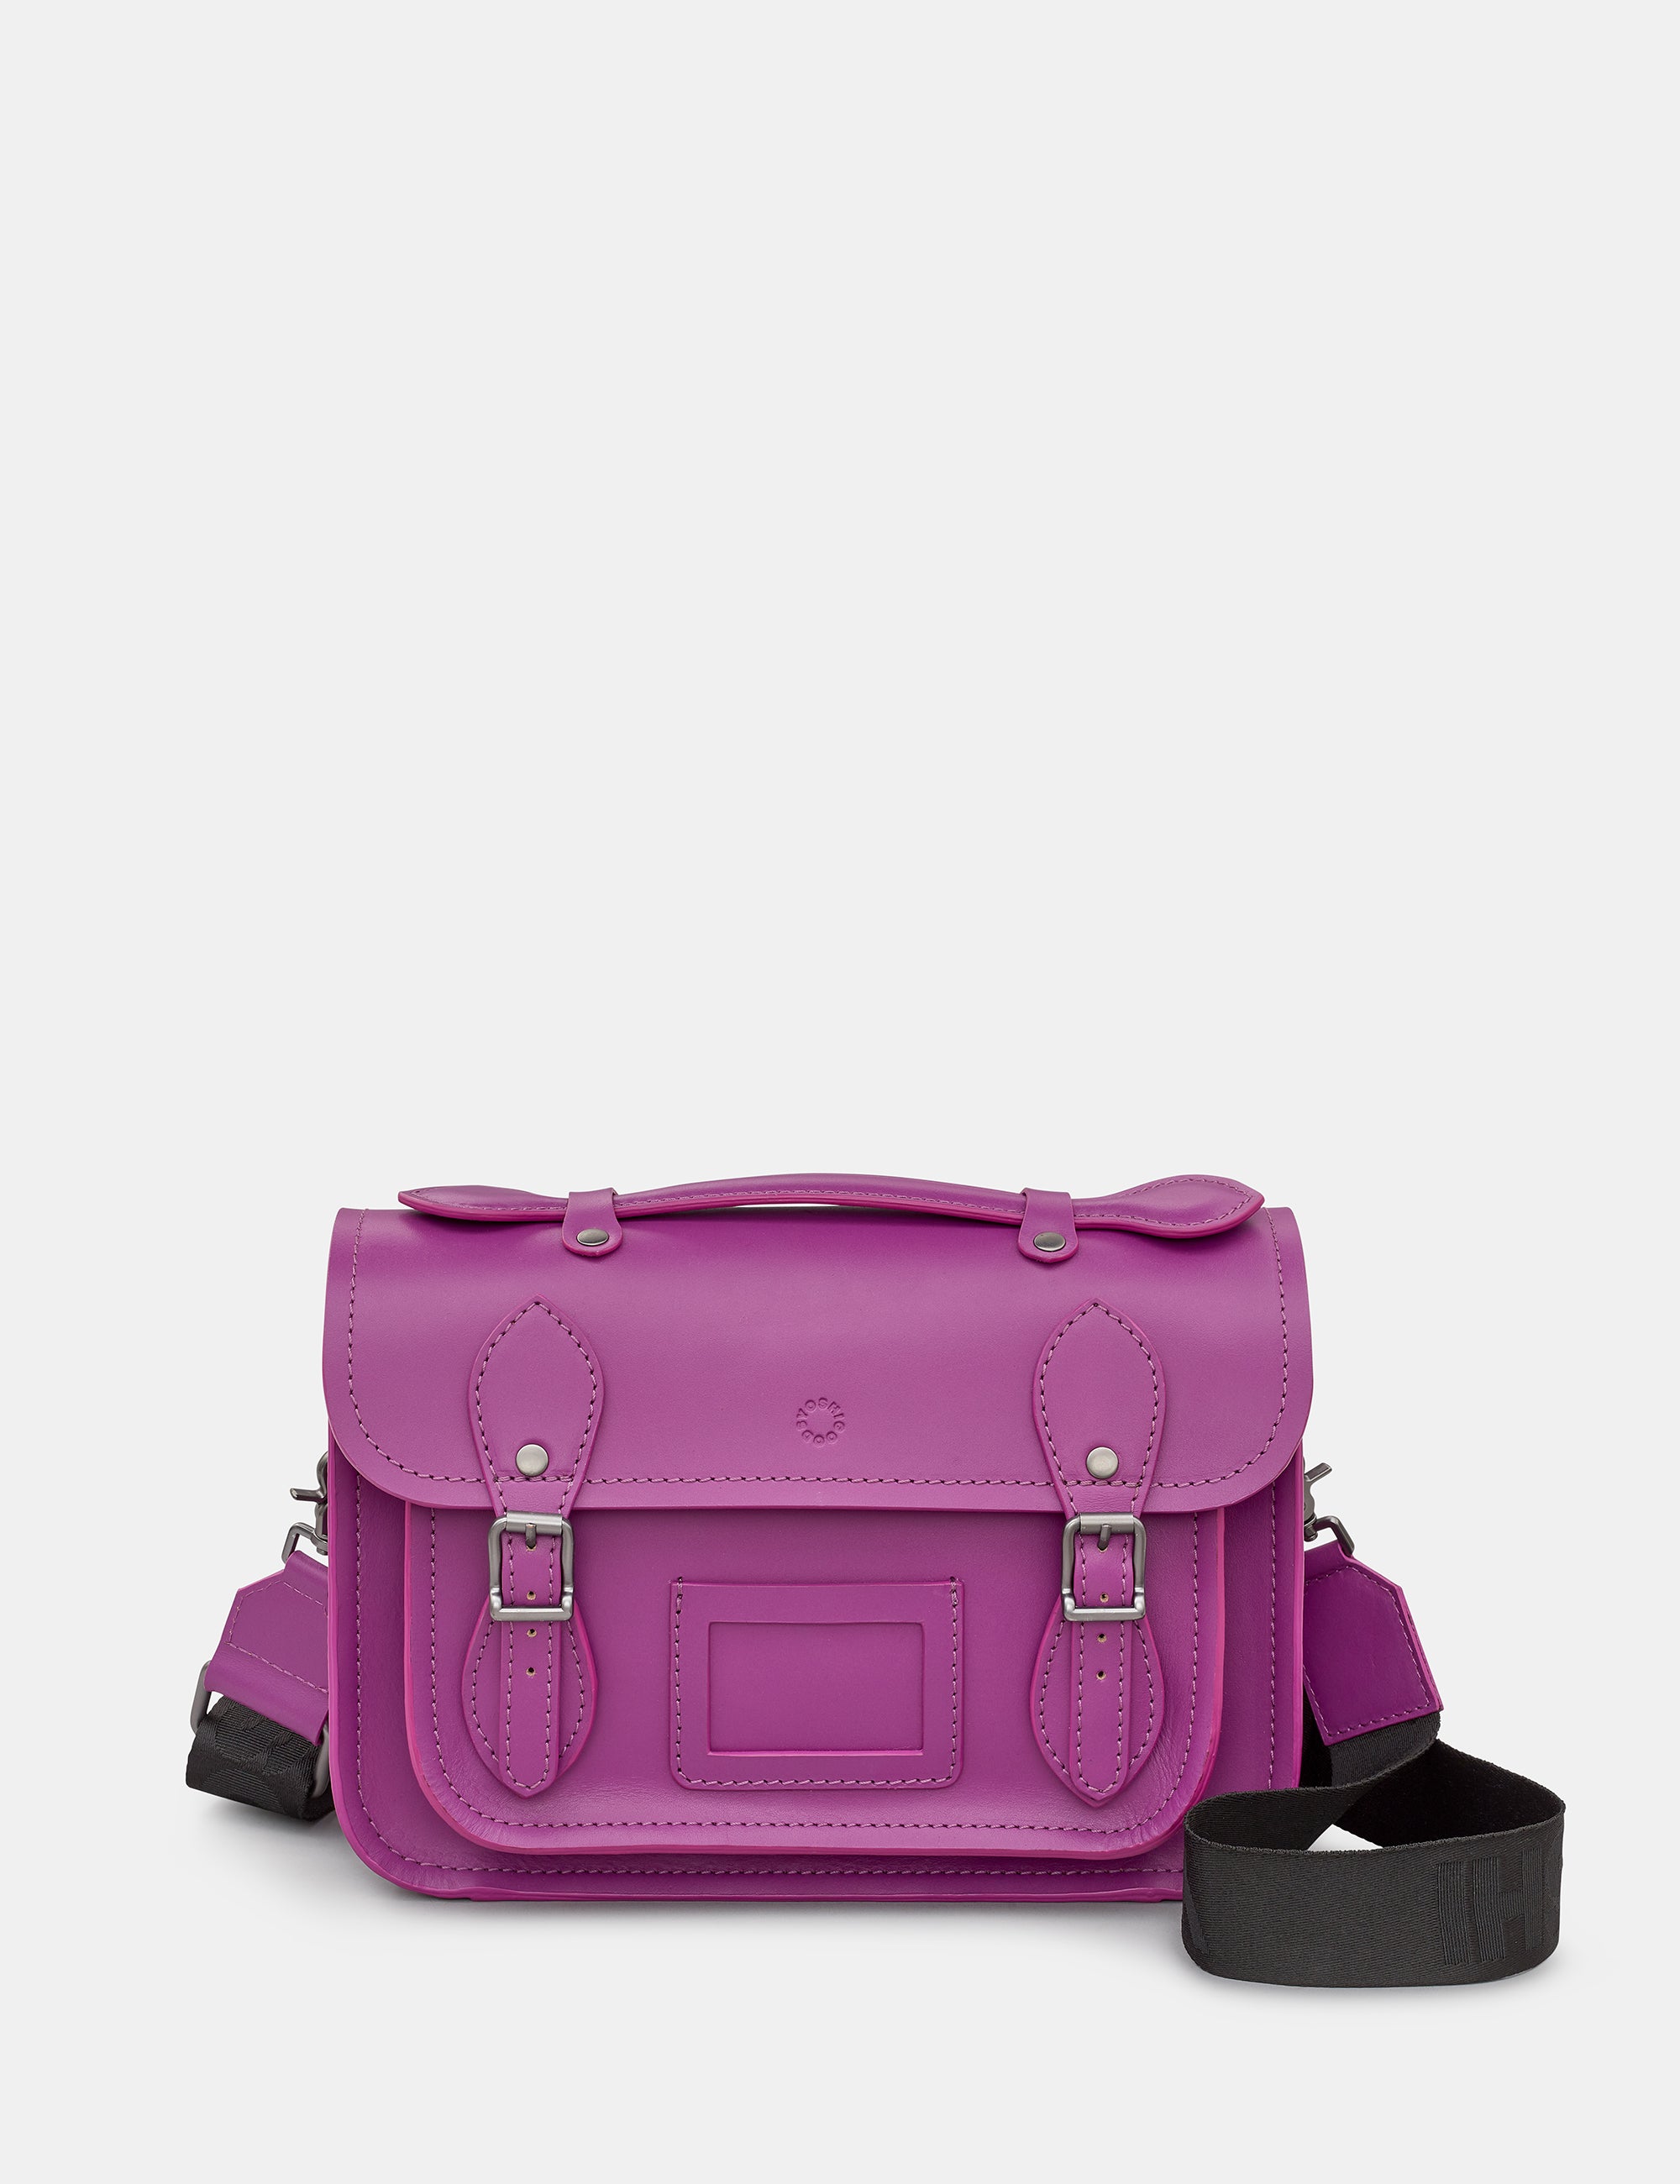 Dewhurst Purple Leather Satchel | Grab Bag | Handbag by Yoshi ...